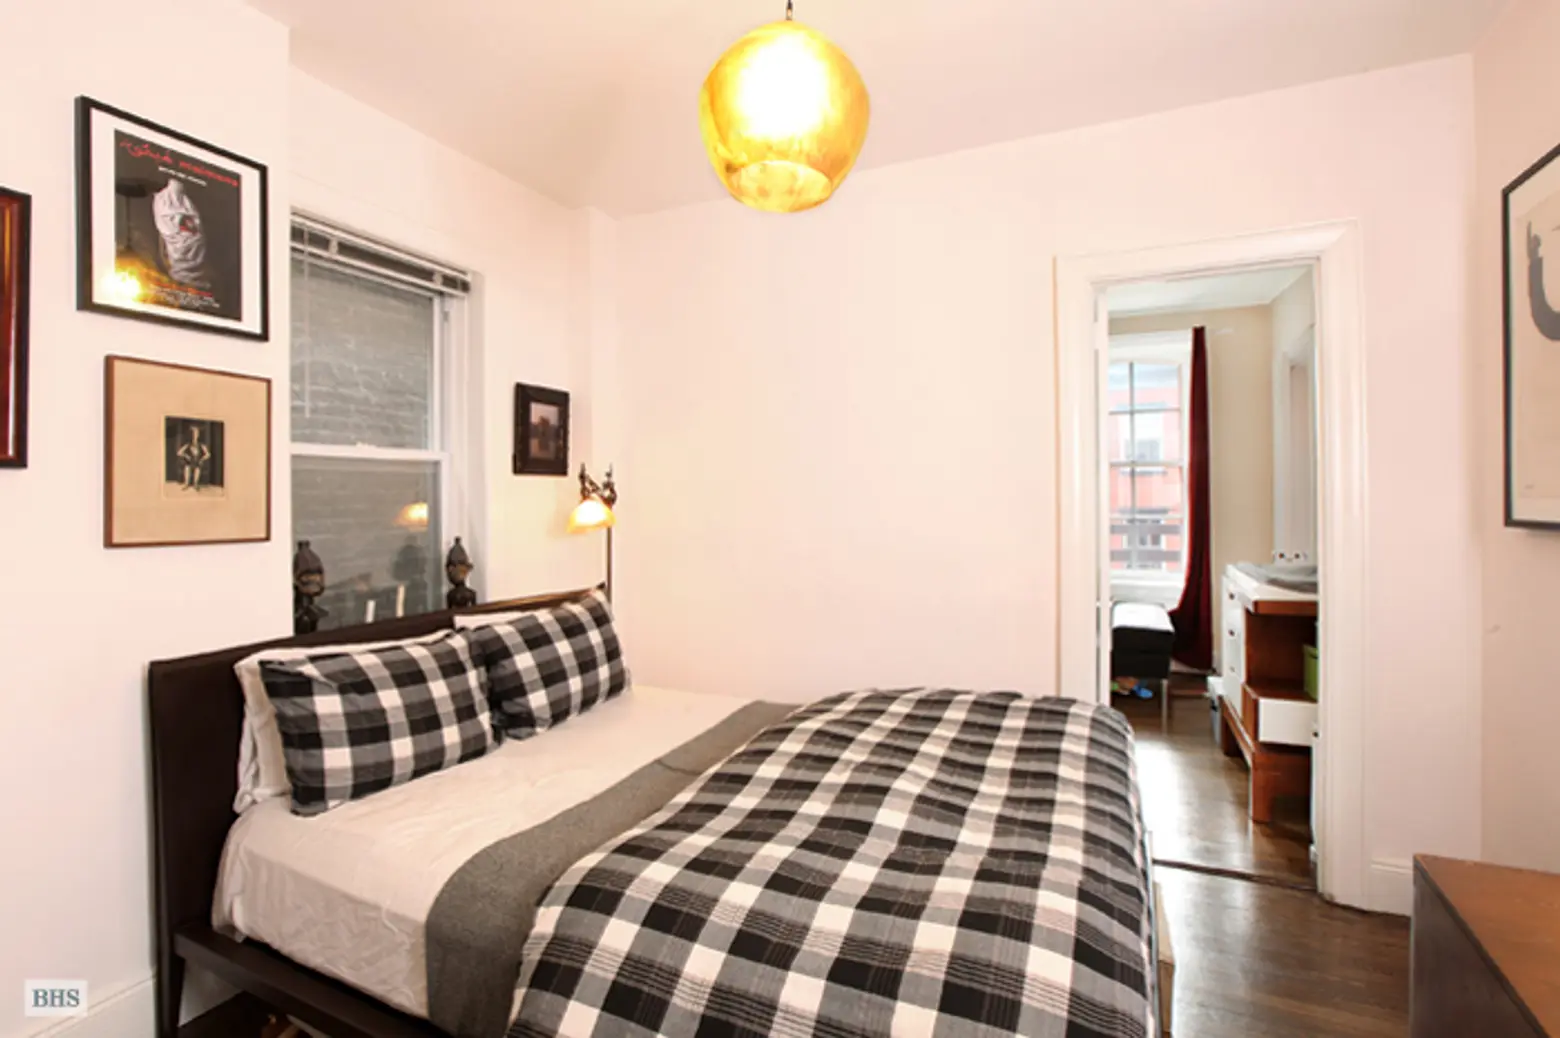 29 Perry Street, West Village, Rental, Short-term Rental, Furnished Rental, furnished apartment for rent